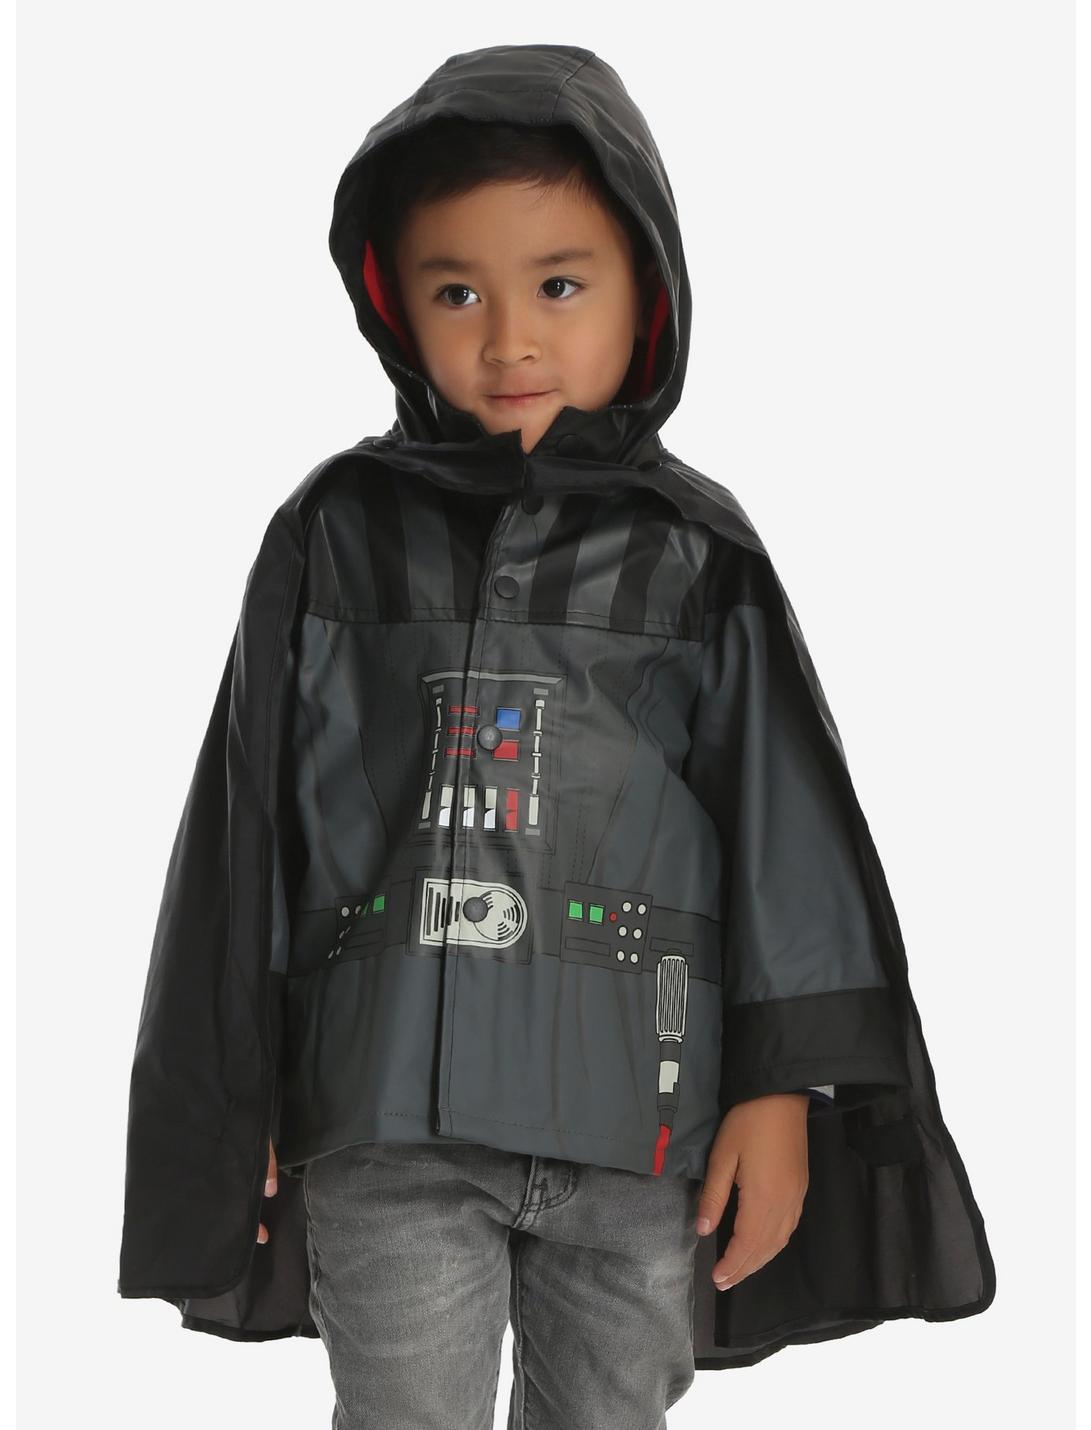 Star Wars Darth Vader Hooded Rain Poncho 